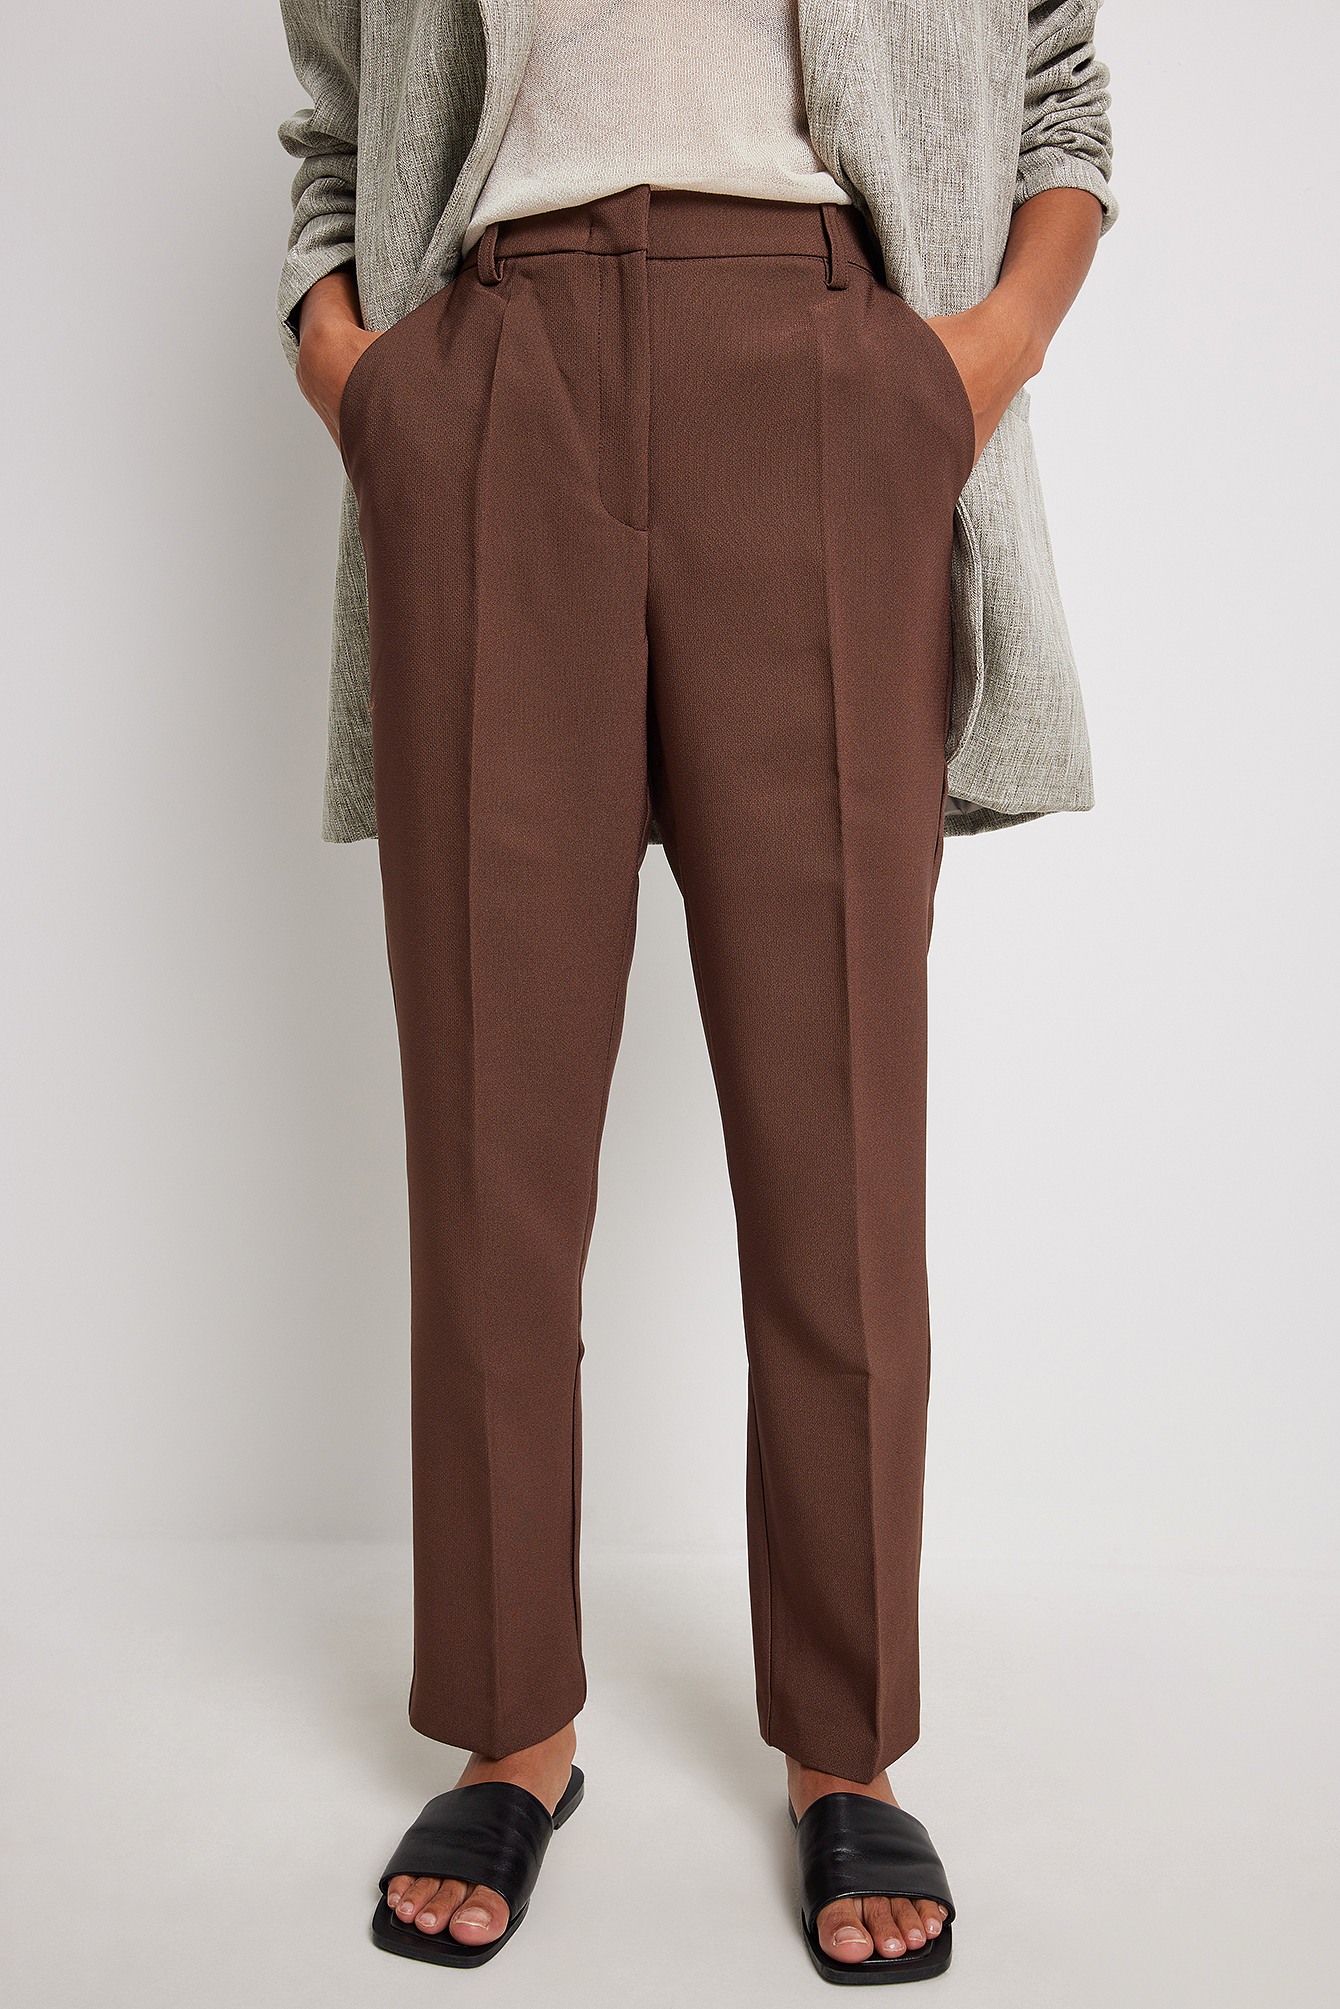 Alfani Men's Slim-Fit Stripe Linen Suit Pants, Brown, 30×32 | eBay